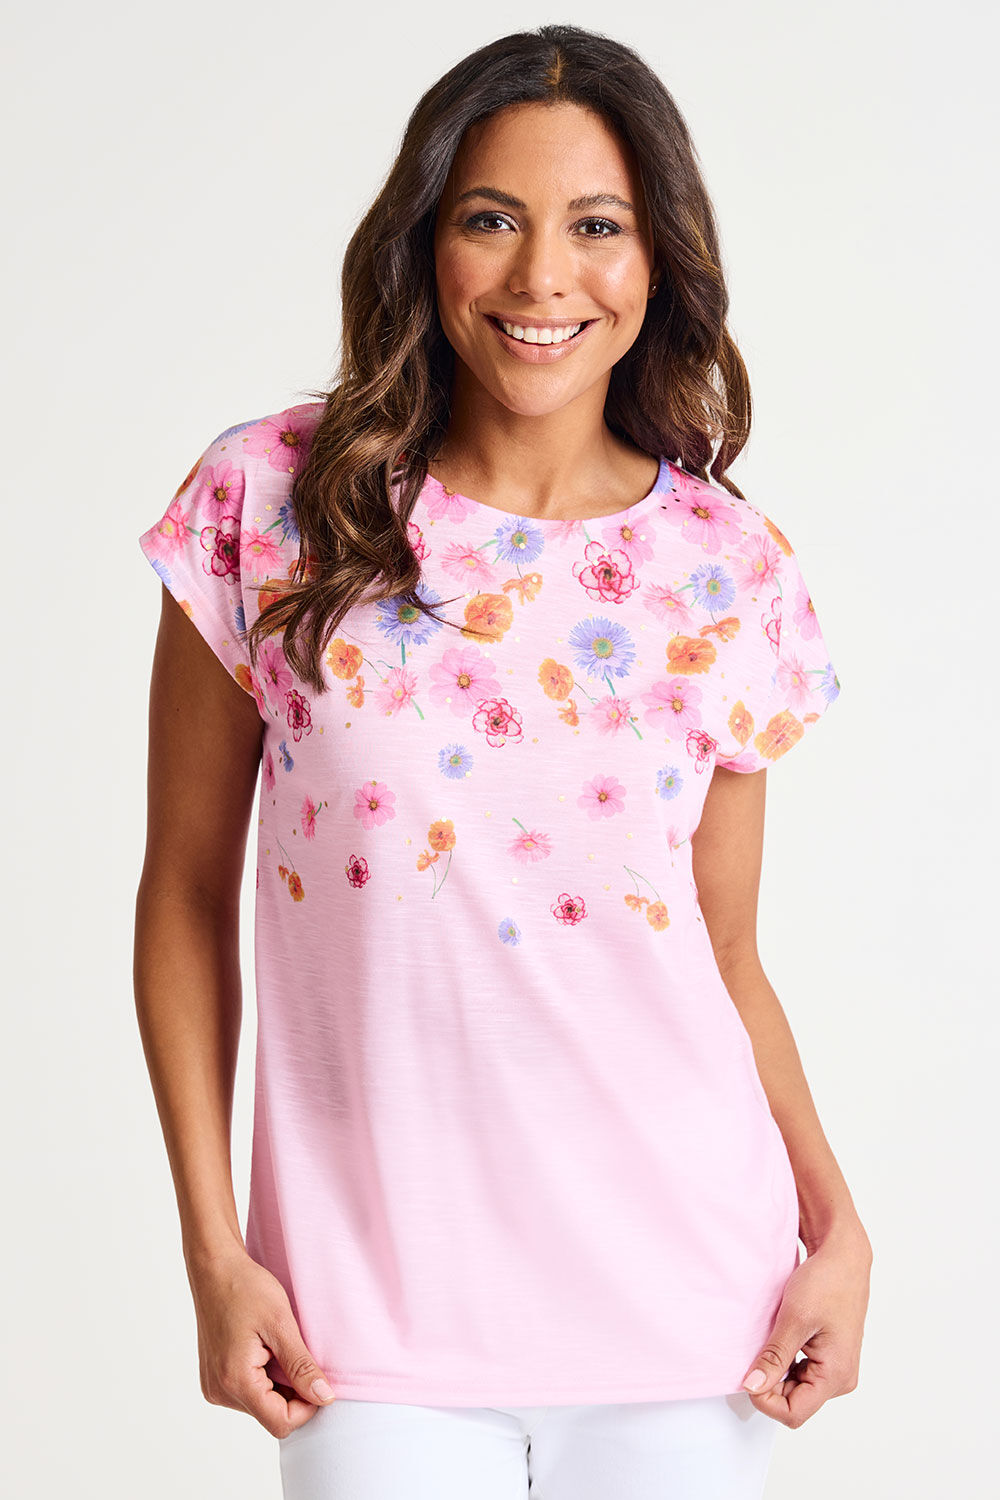 Bonmarche Pink Short Sleeve Trailing Floral T-Shirt With Foil Detail, Size: 28